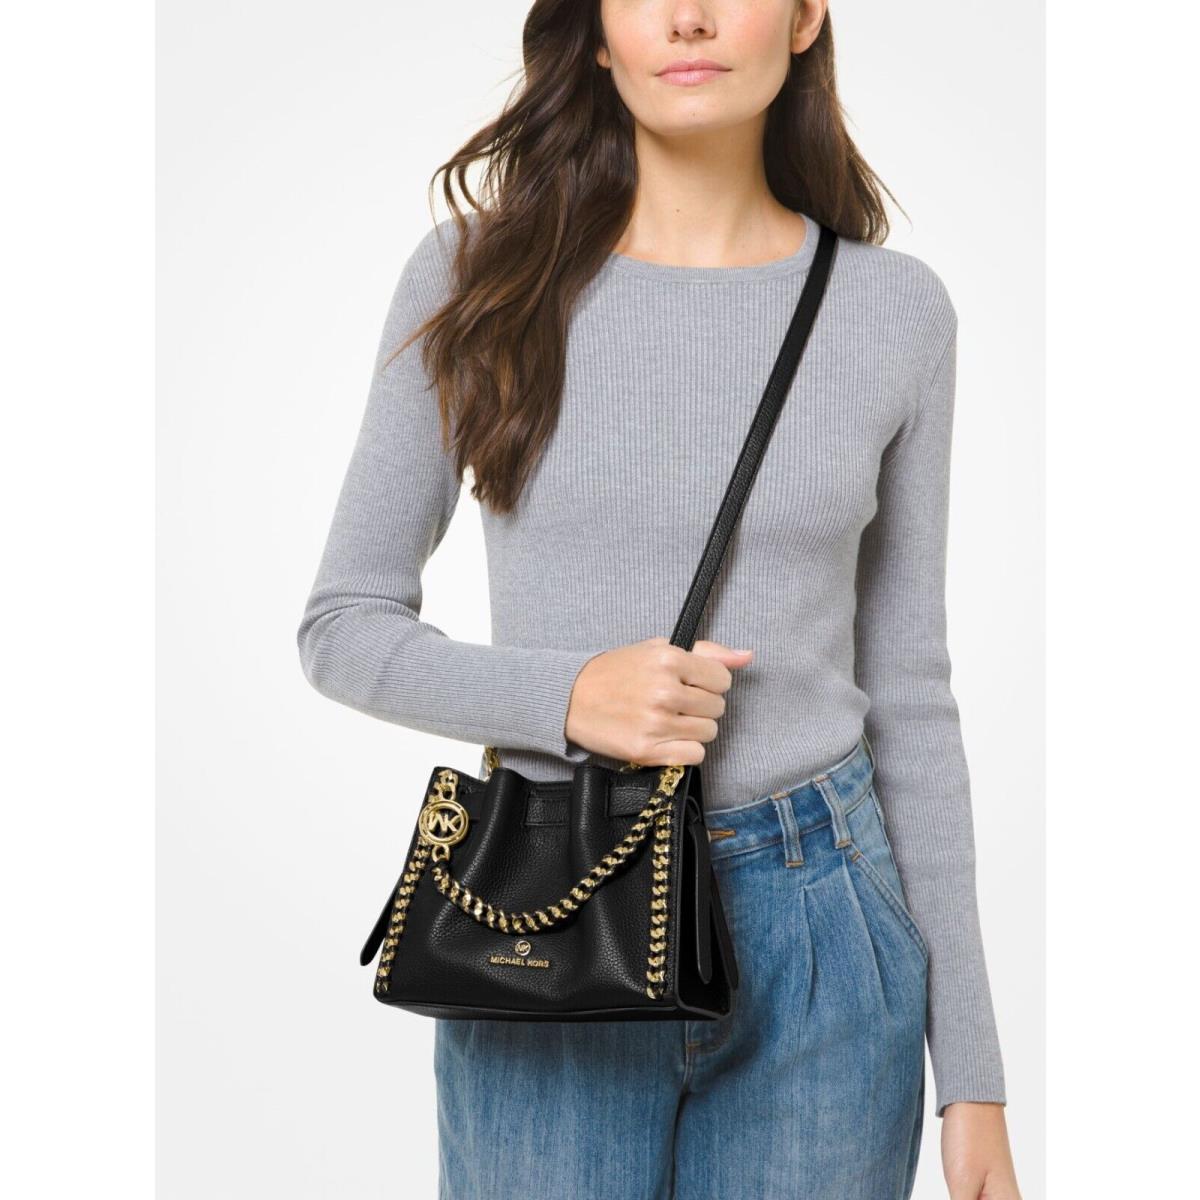 Michael Kors Mina Small Crossbody/handbag Black Leather Woven Chain ...